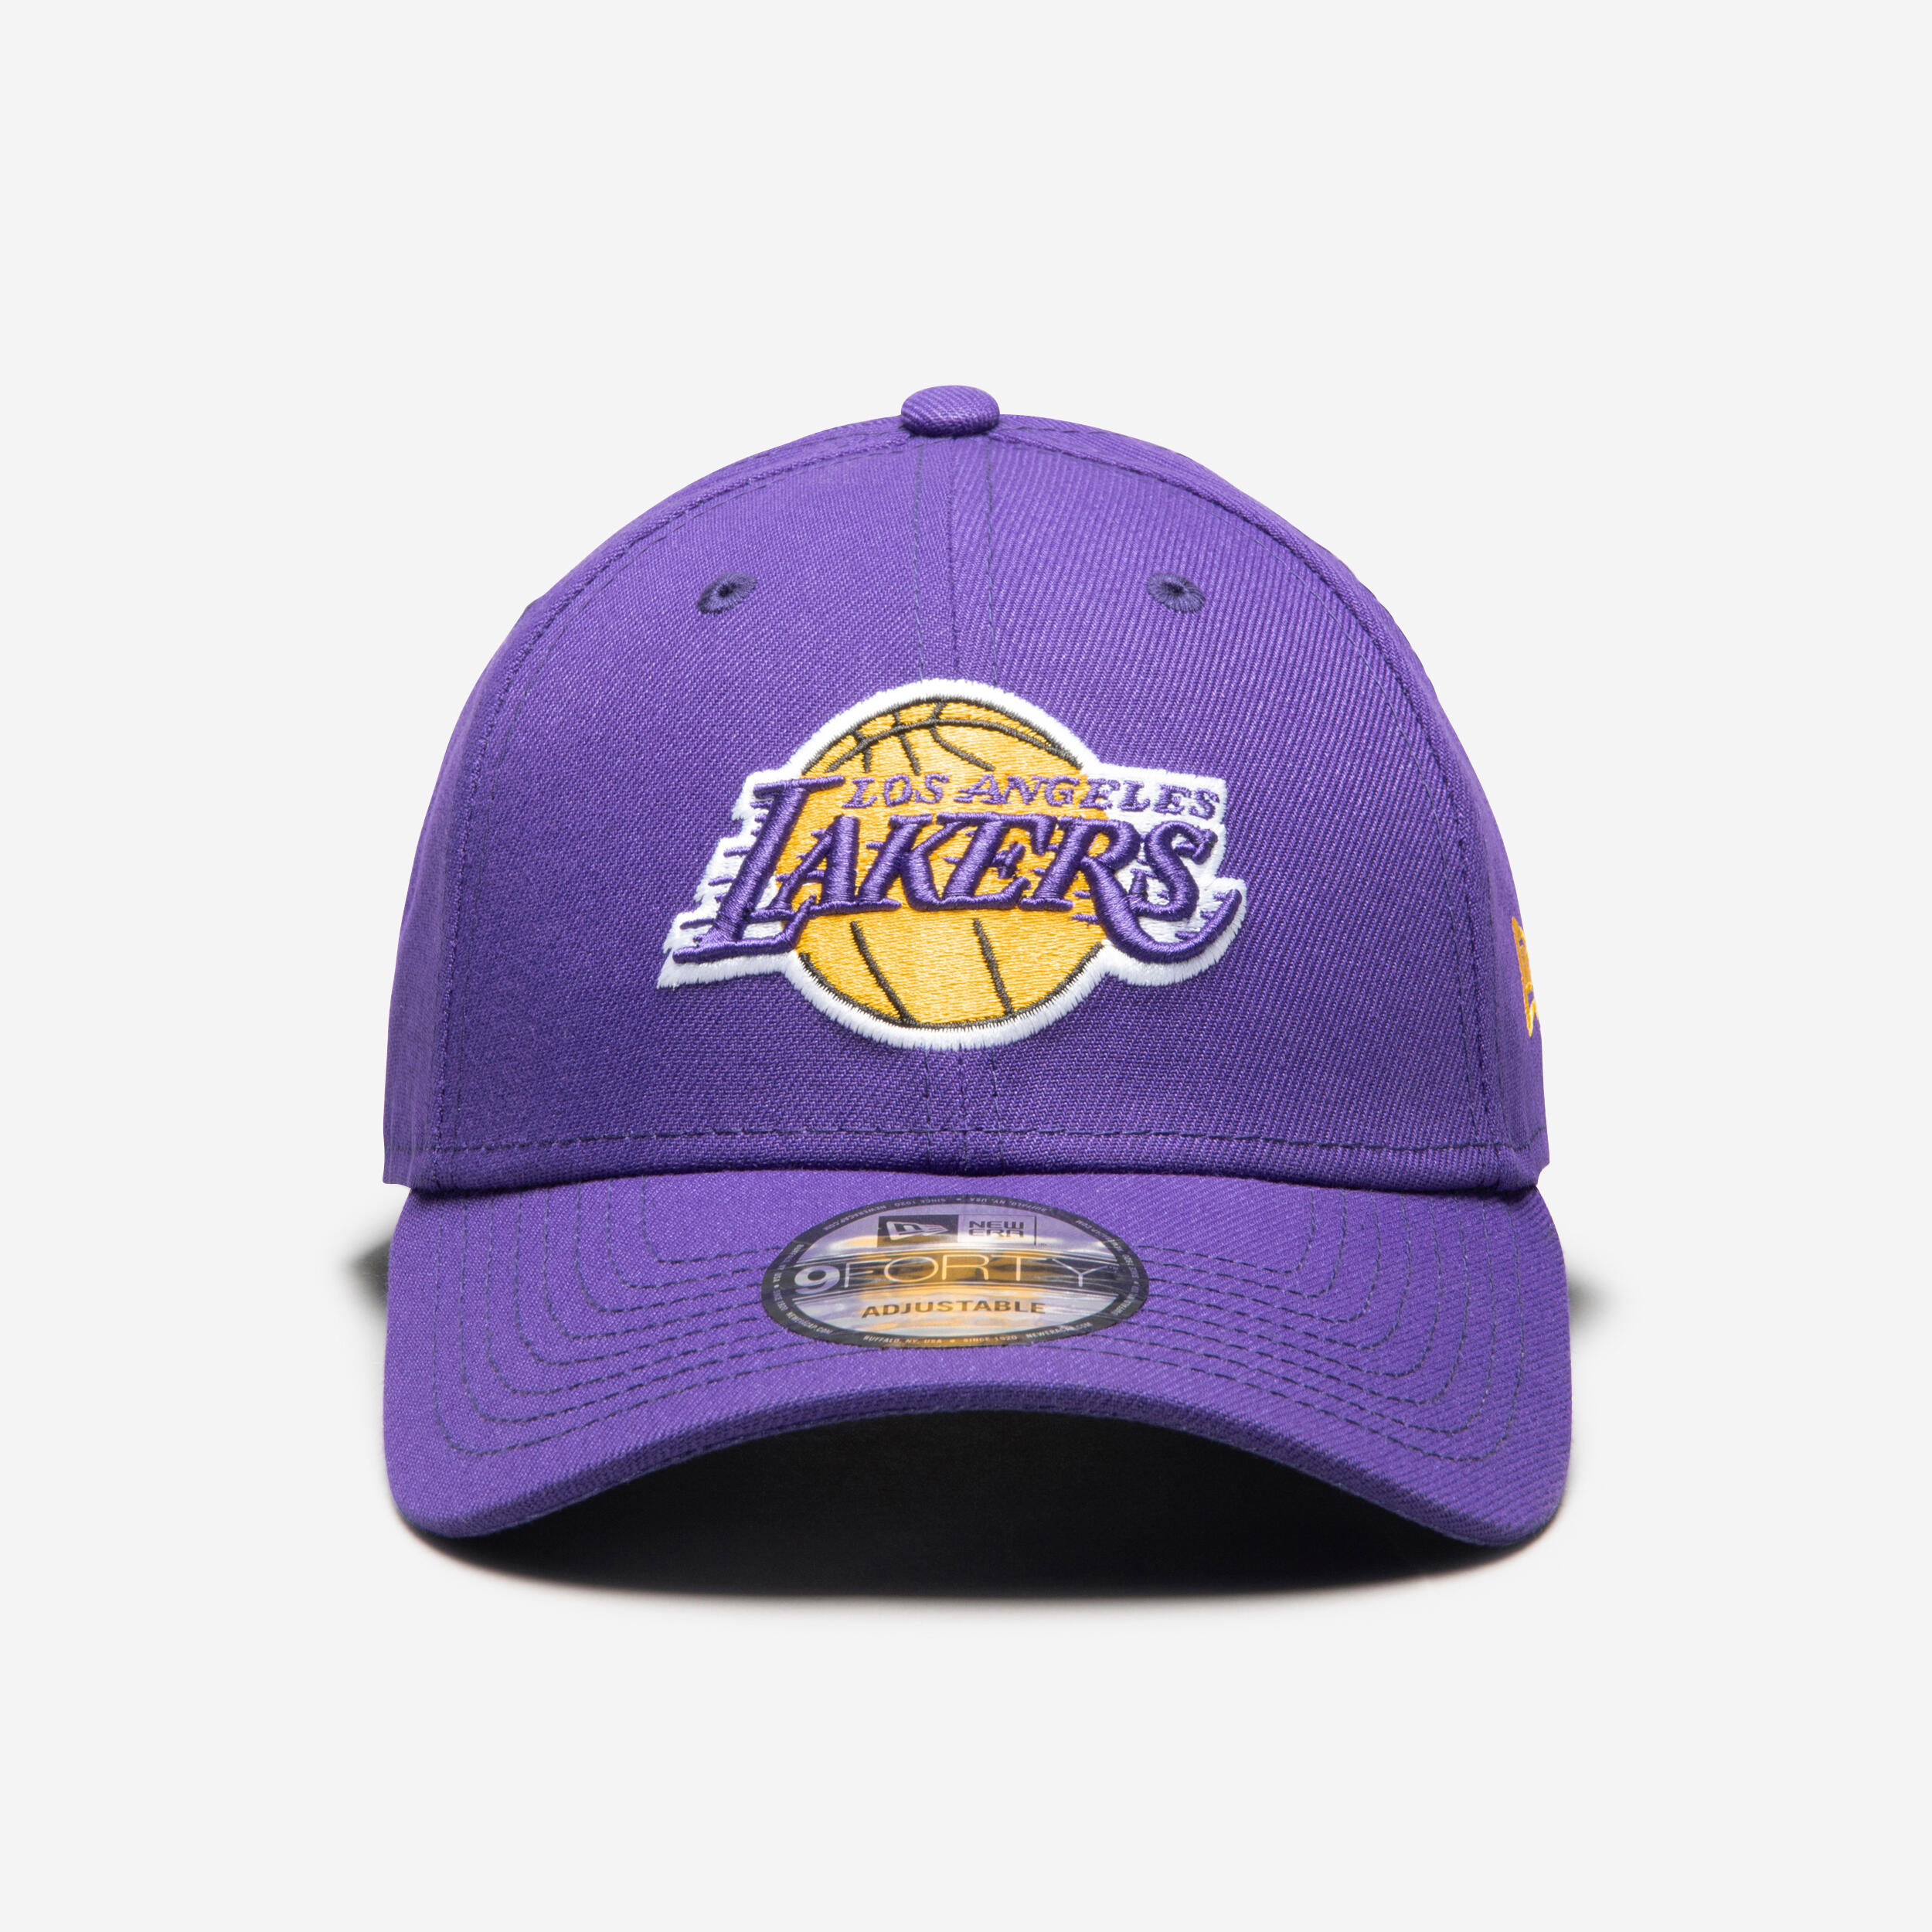 Men's/Women's Basketball Cap NBA - Los Angeles Lakers/Purple 1/7